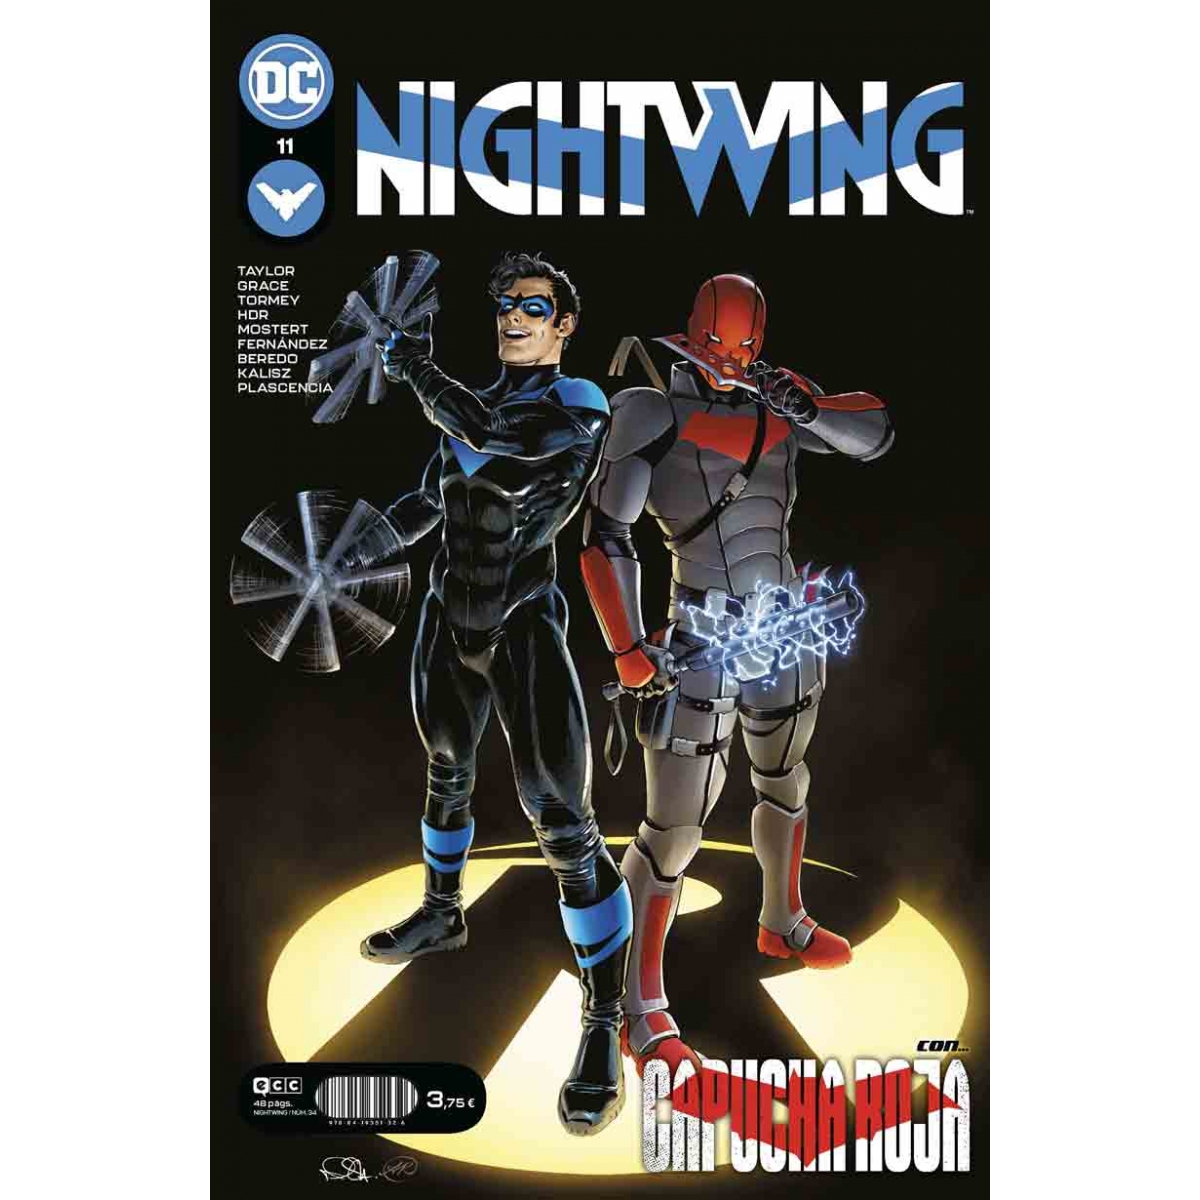 Nightwing 11